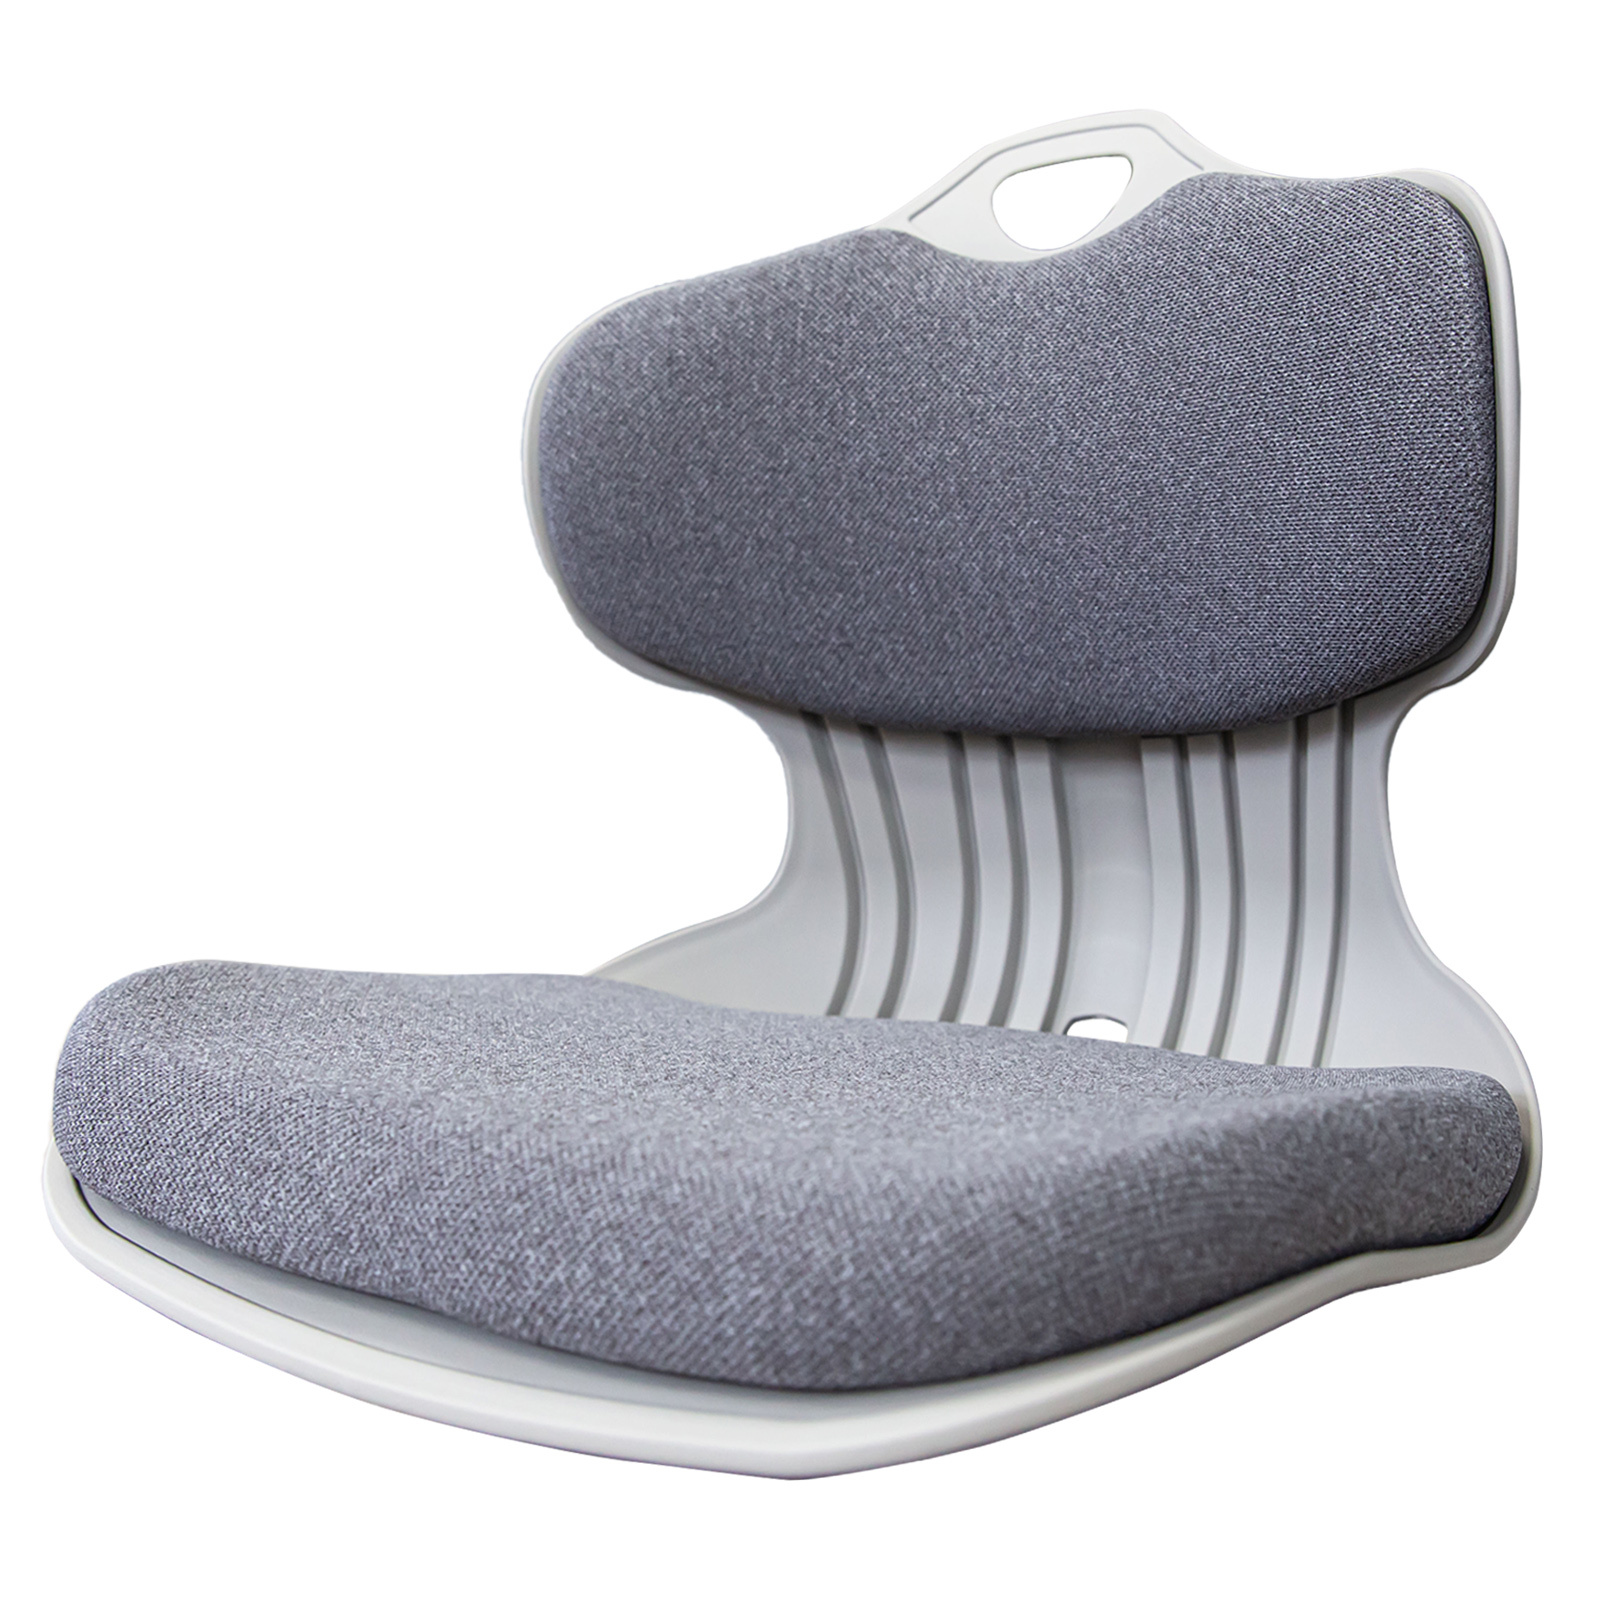 Korean Slender Posture Correction Chair - GREY